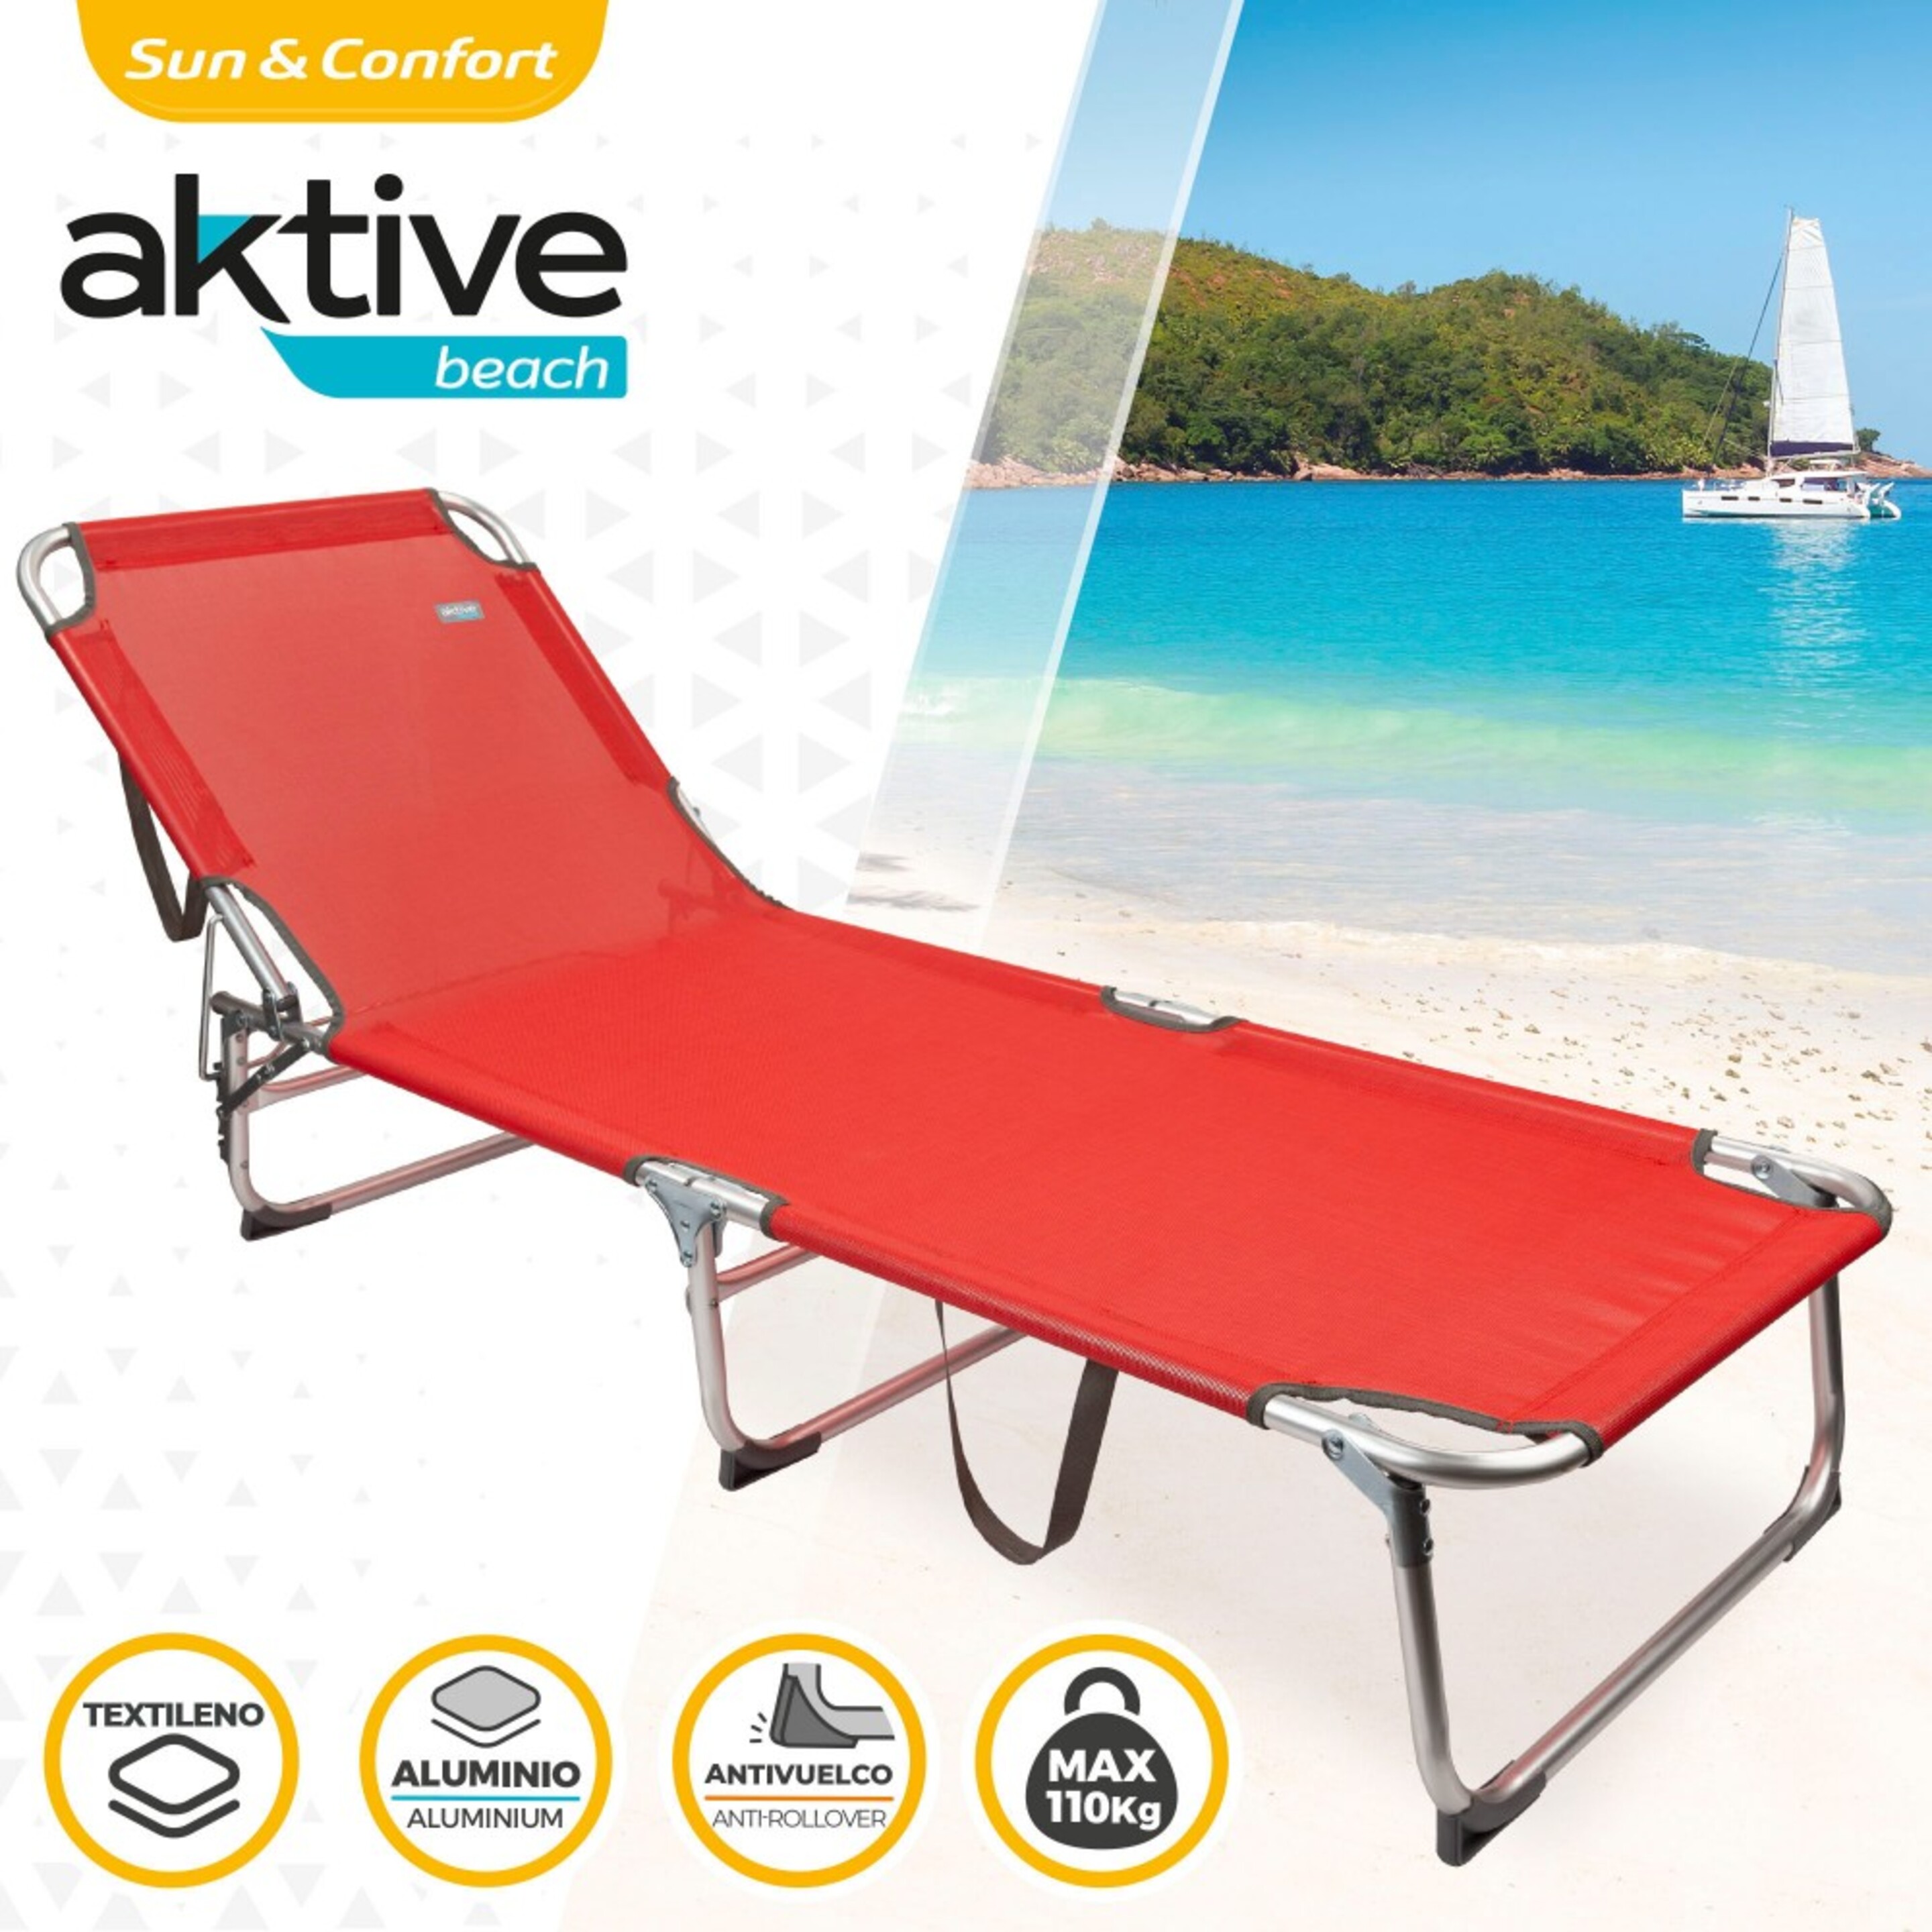 Tumbona De Playa Plegable Conpaldo Reclinable Aktive Beach - Rojo - Tumbona De Playa Aktive  MKP